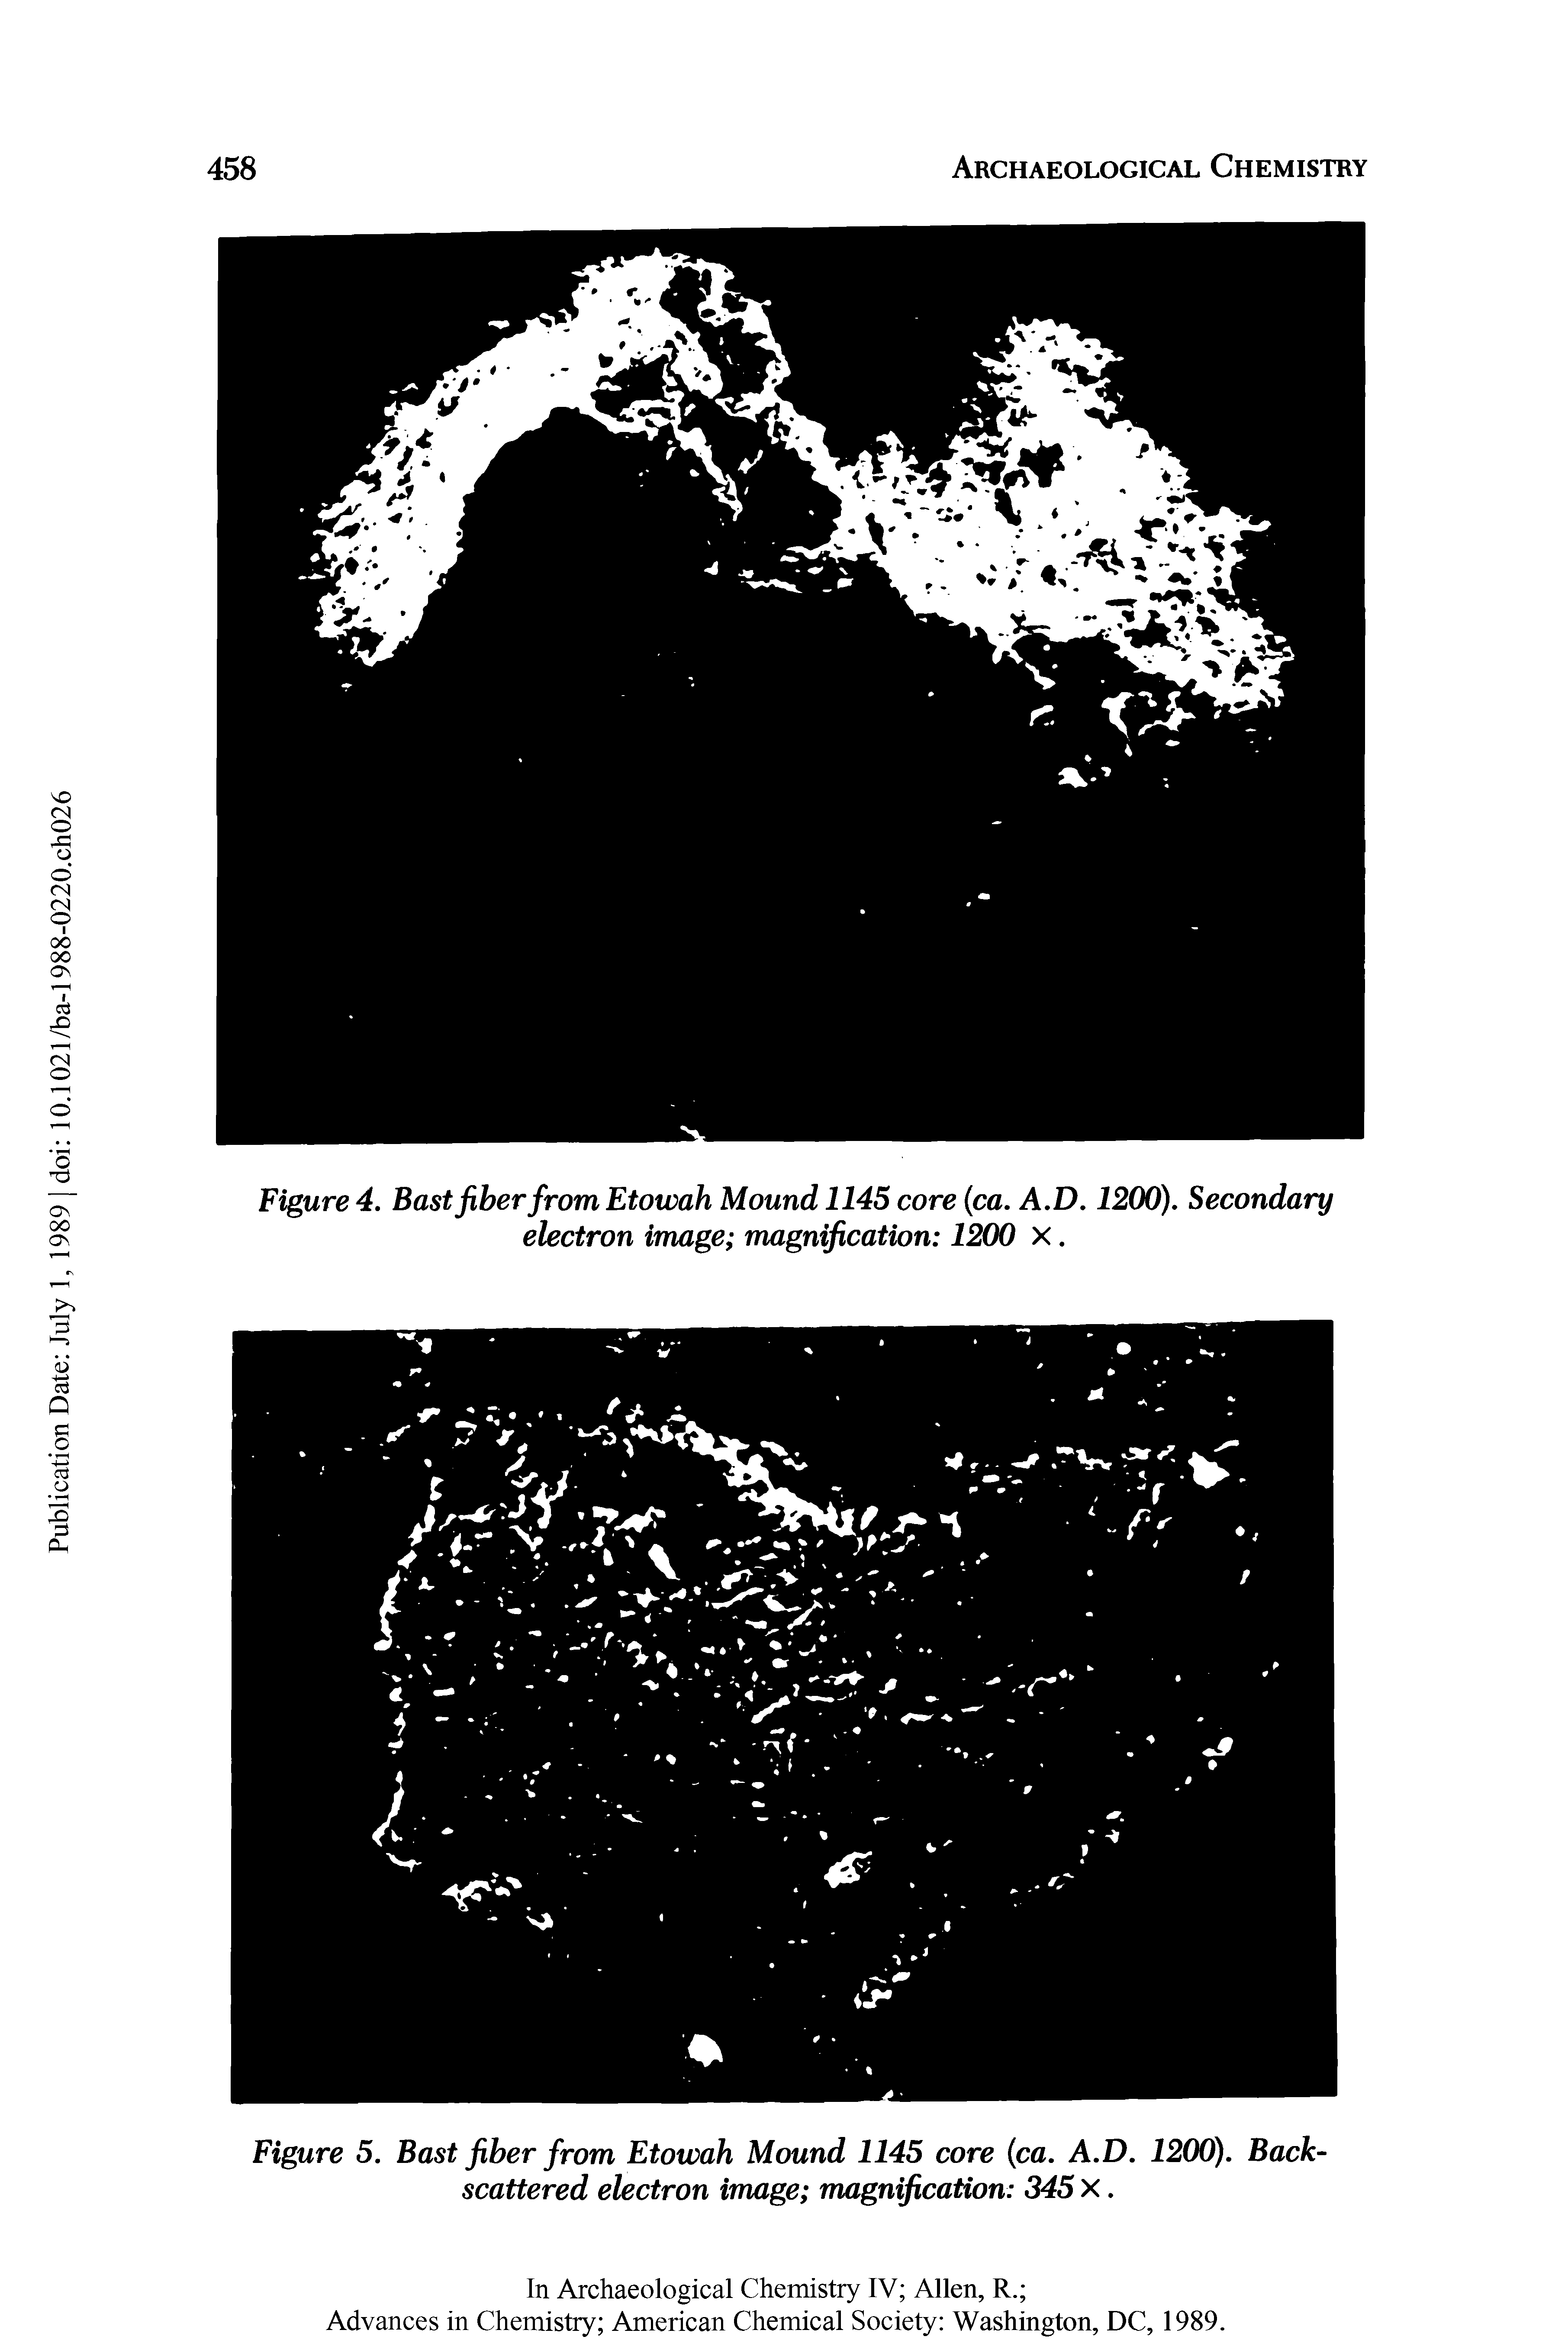 Figure 4. Bast fiber from Etowah Mound 1145 core (ca. A.D. 1200). Secondary electron image magnification 1200 X.